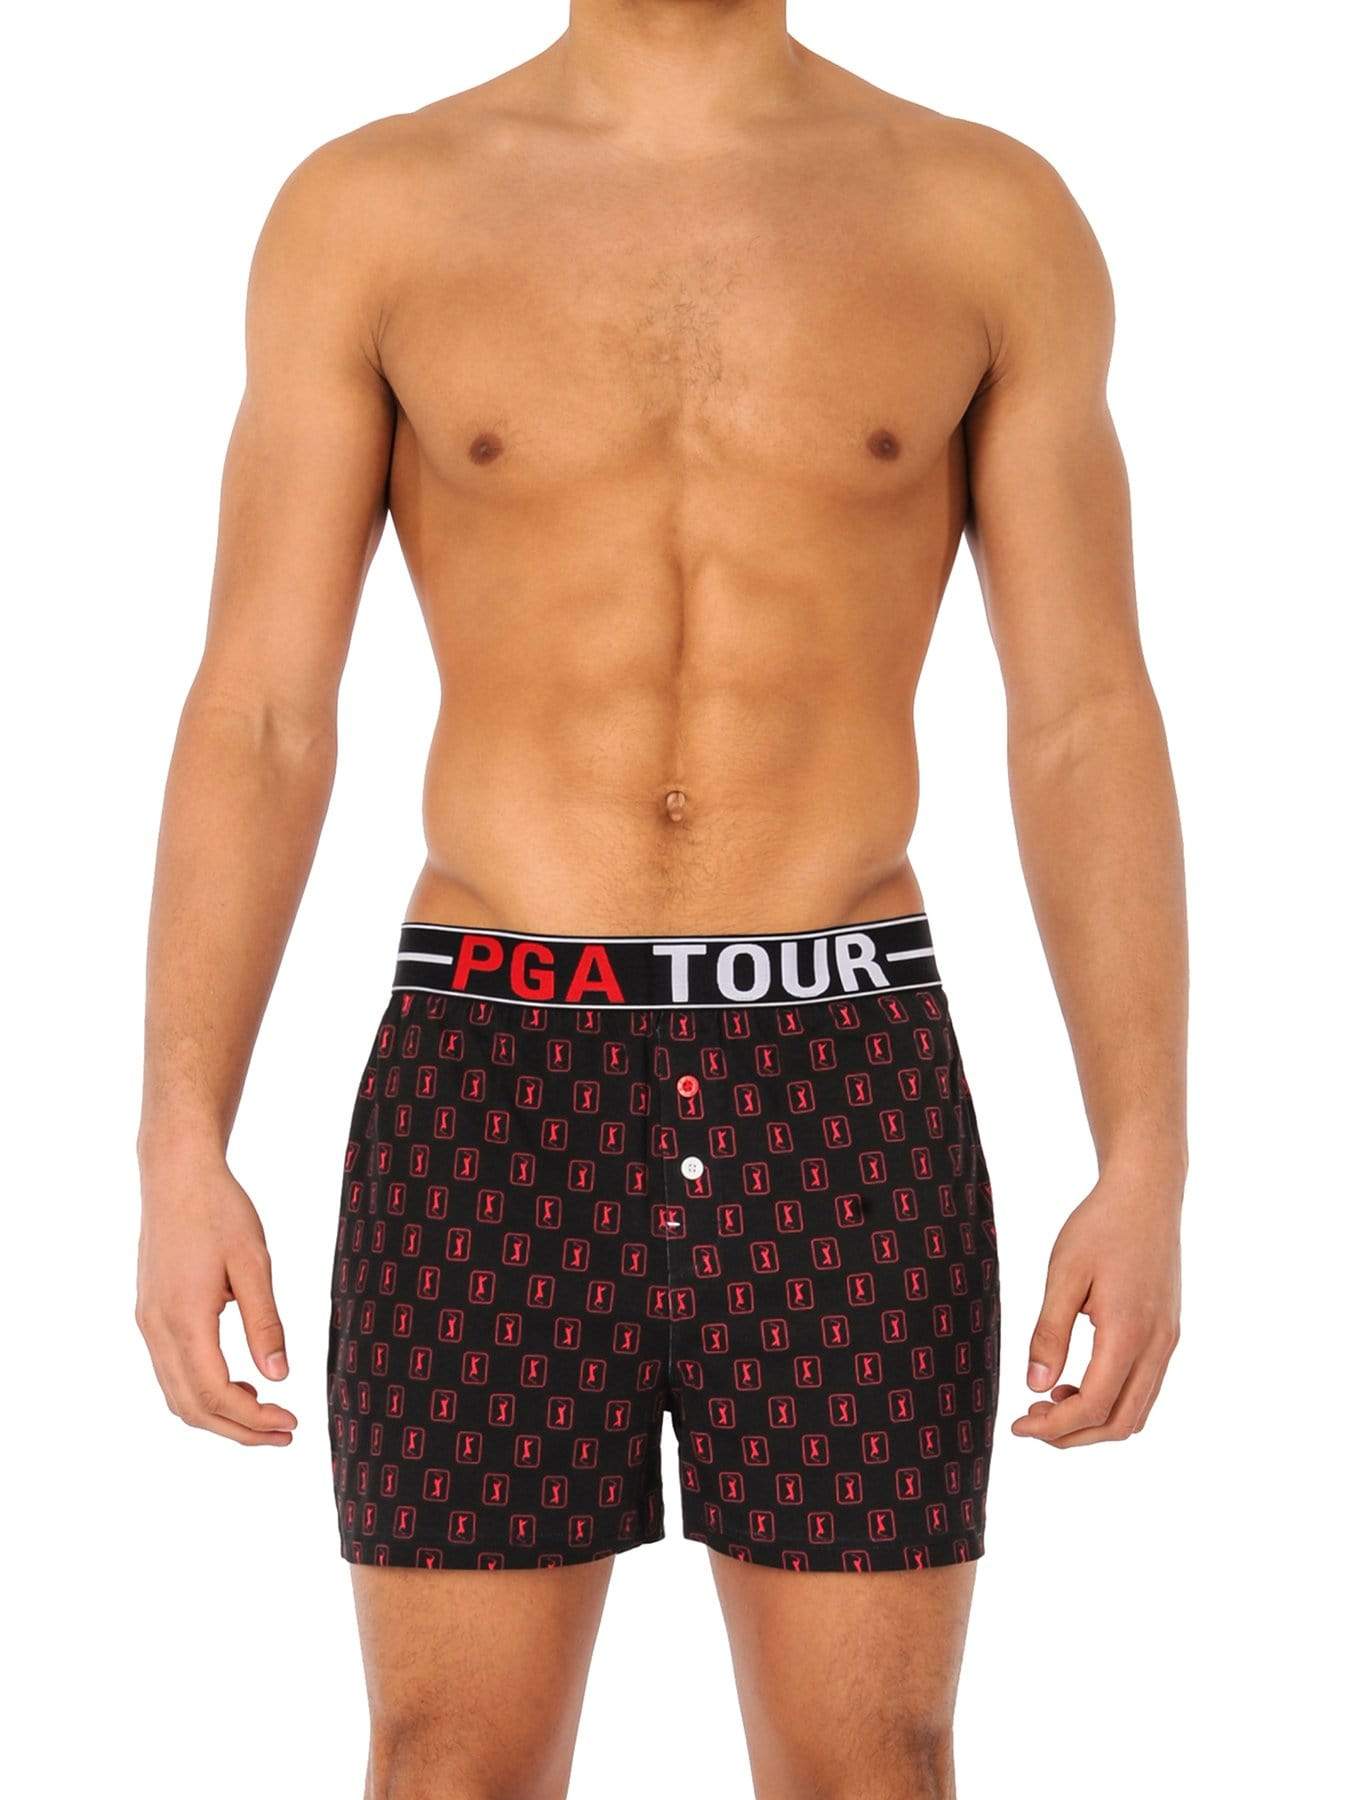 PGA TOUR Apparel Mens Allover Printed Loose Boxer Short Underwear, Size Small, Black, 100% Cotton | Golf Apparel Shop